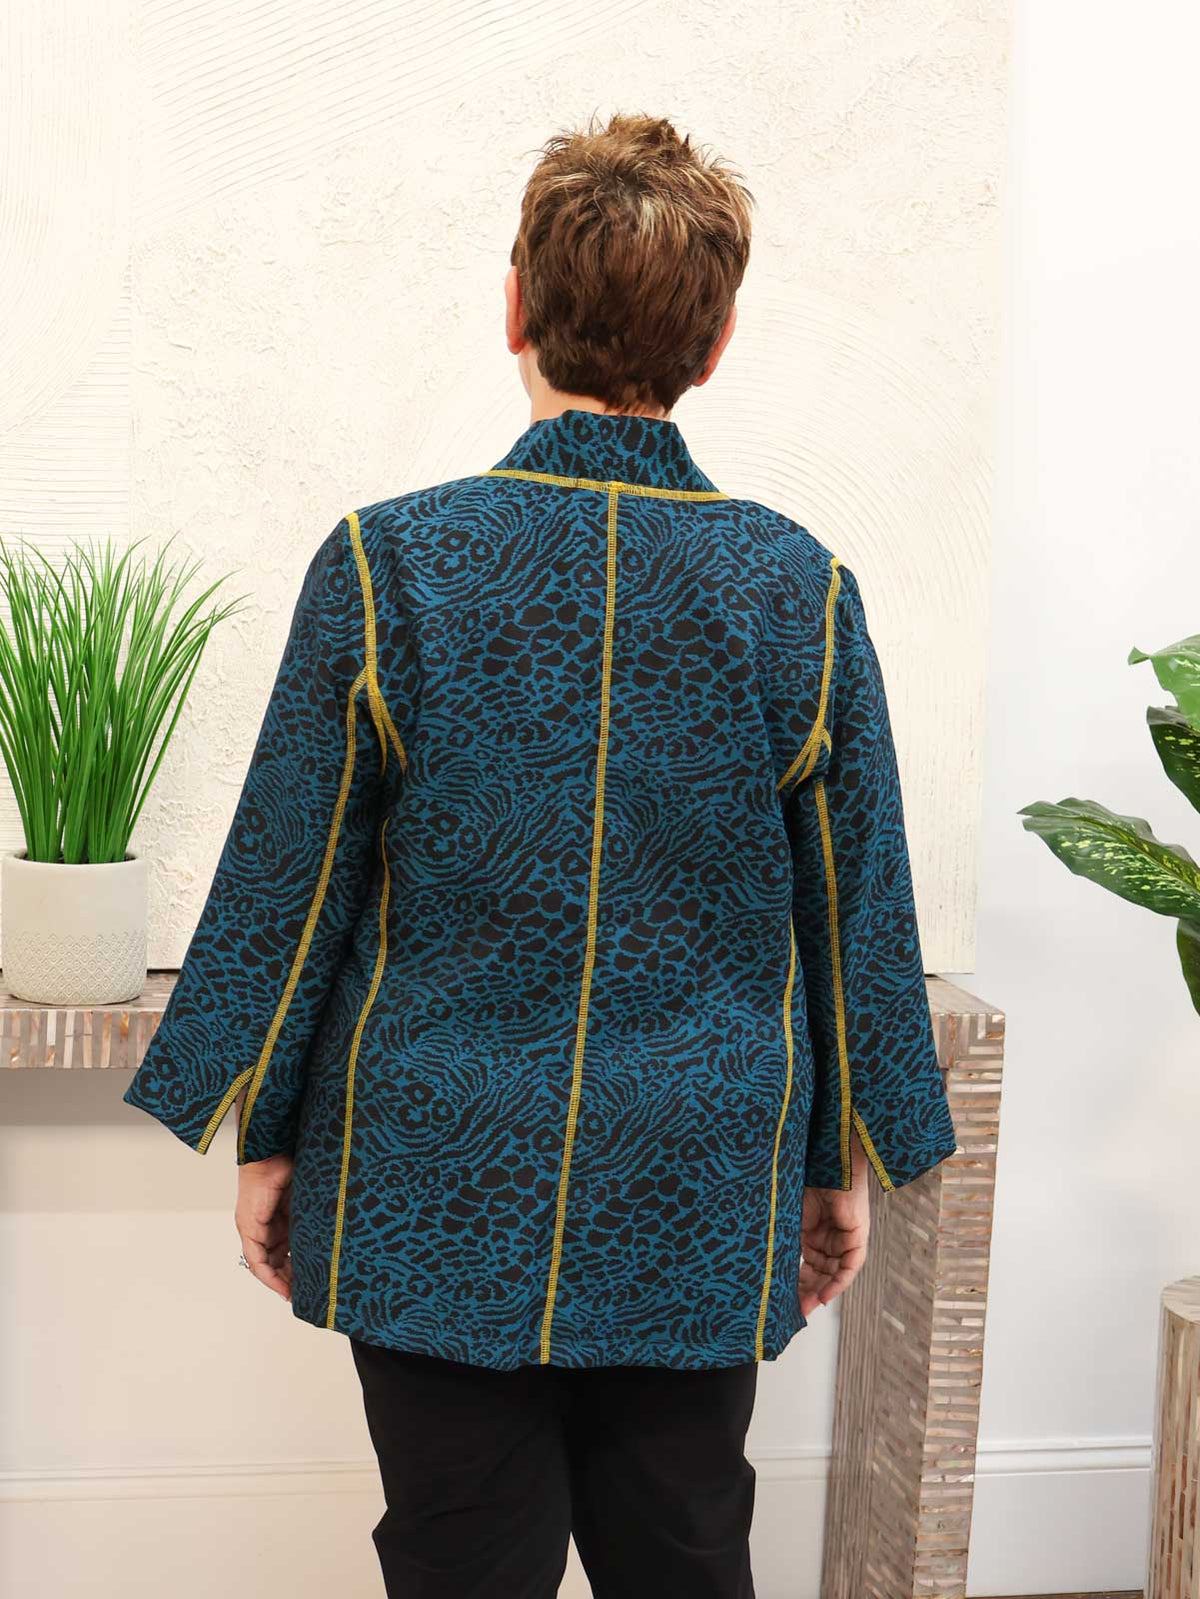 Moonlight Contrast Stitch Button Jacket, Turquoise/Black - Statement Boutique